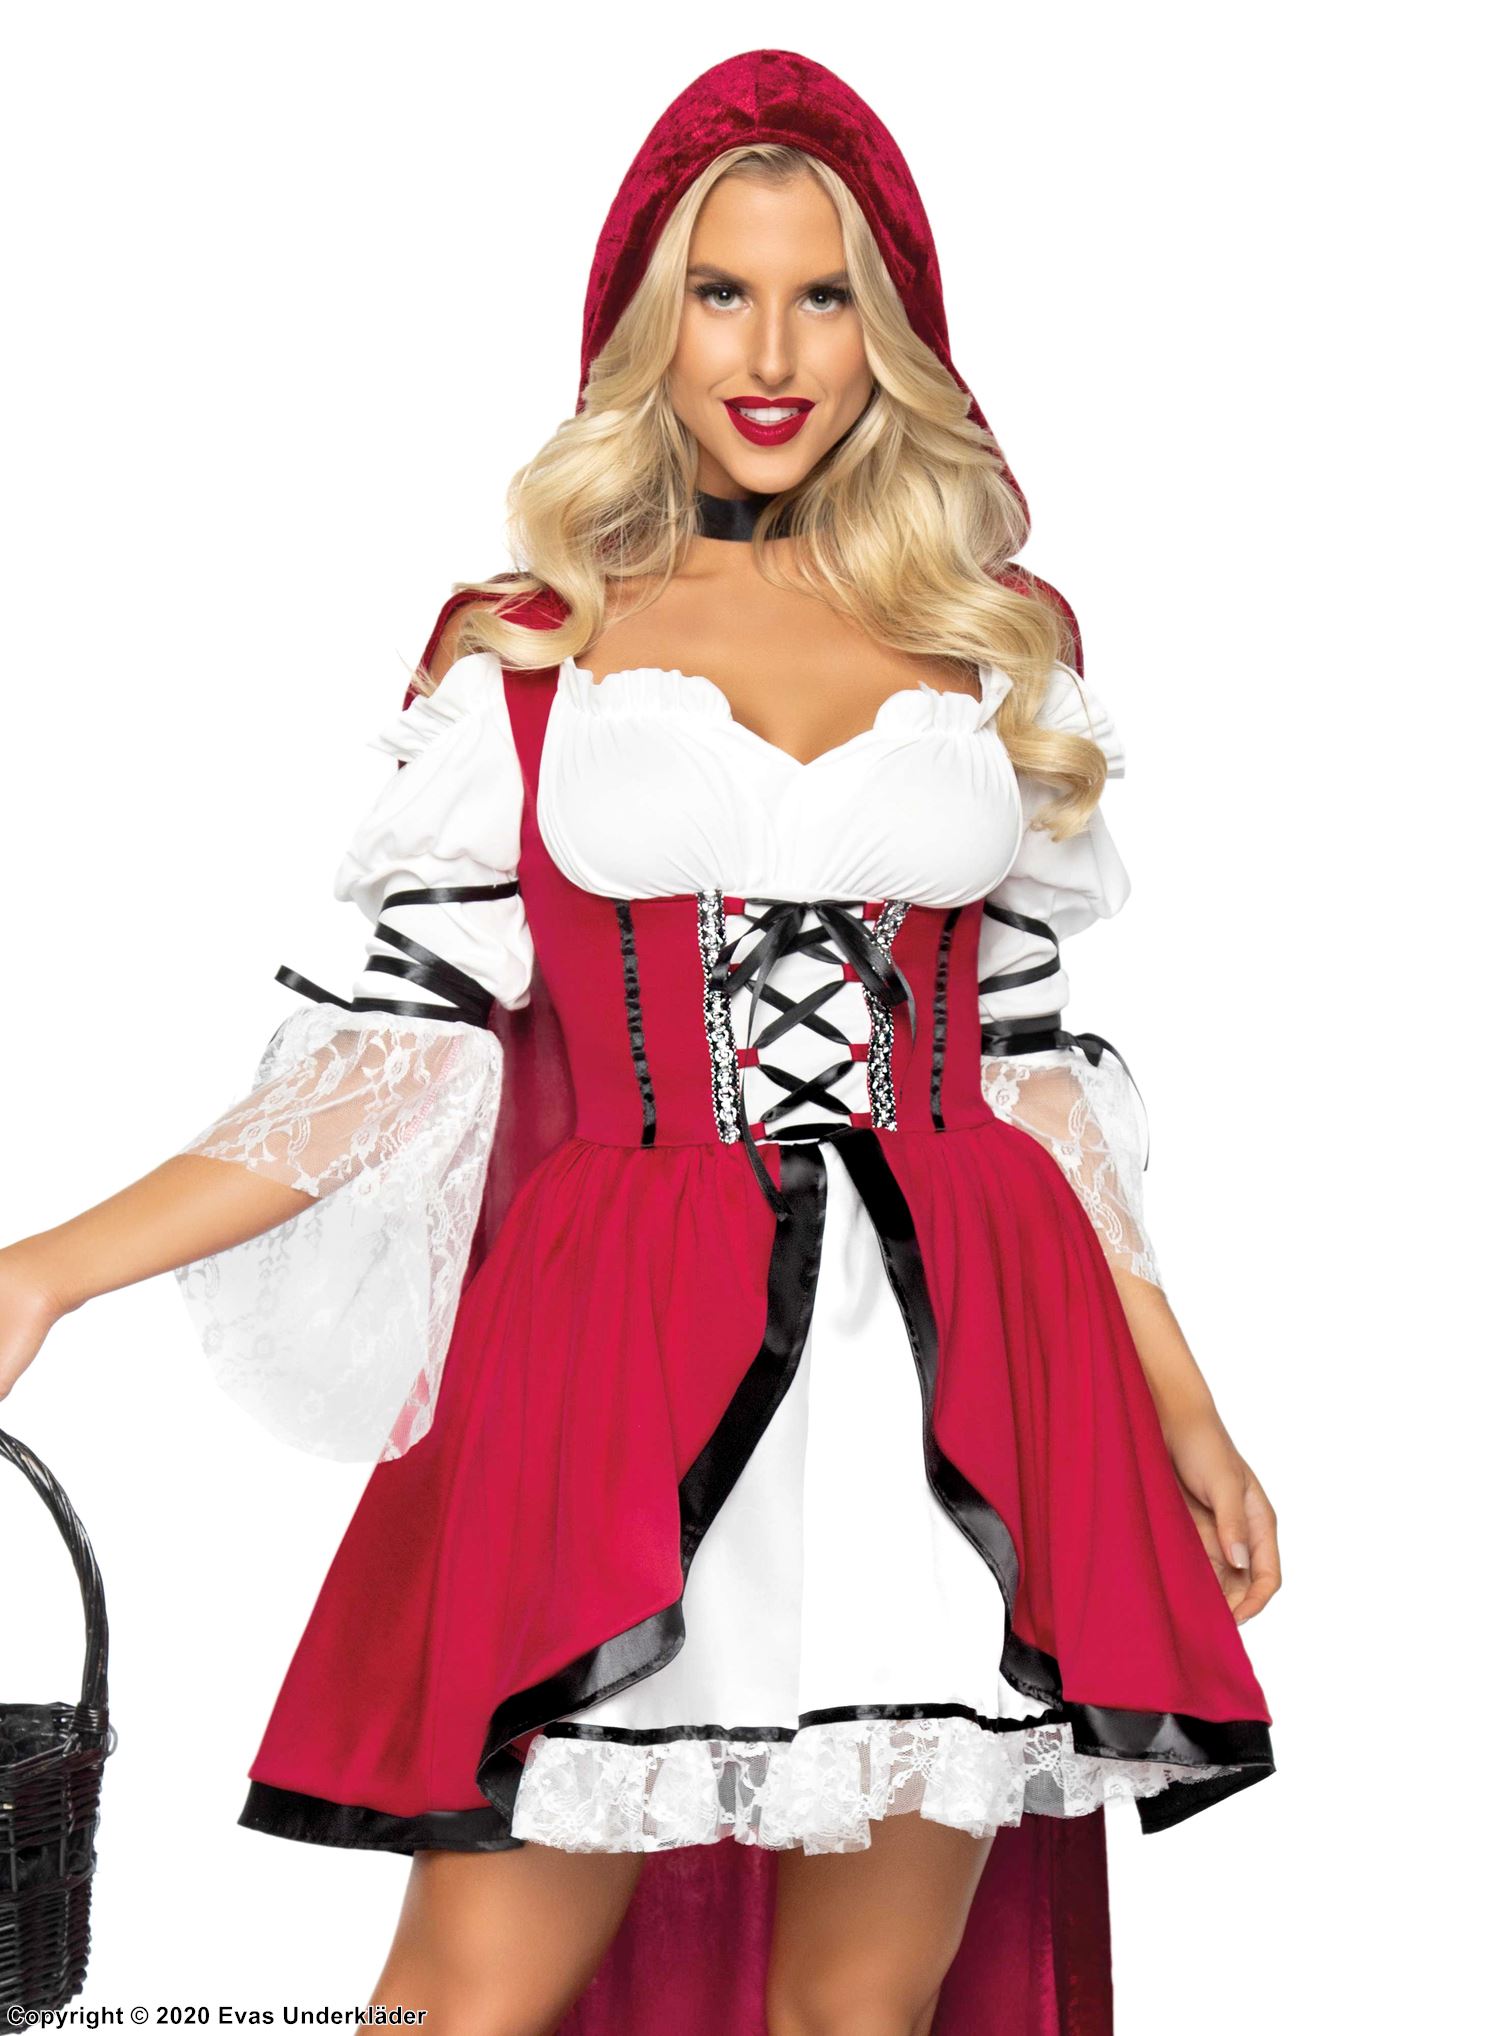 Red Riding Hood, costume dress, satin trim, hood, cape, peasant sleeves